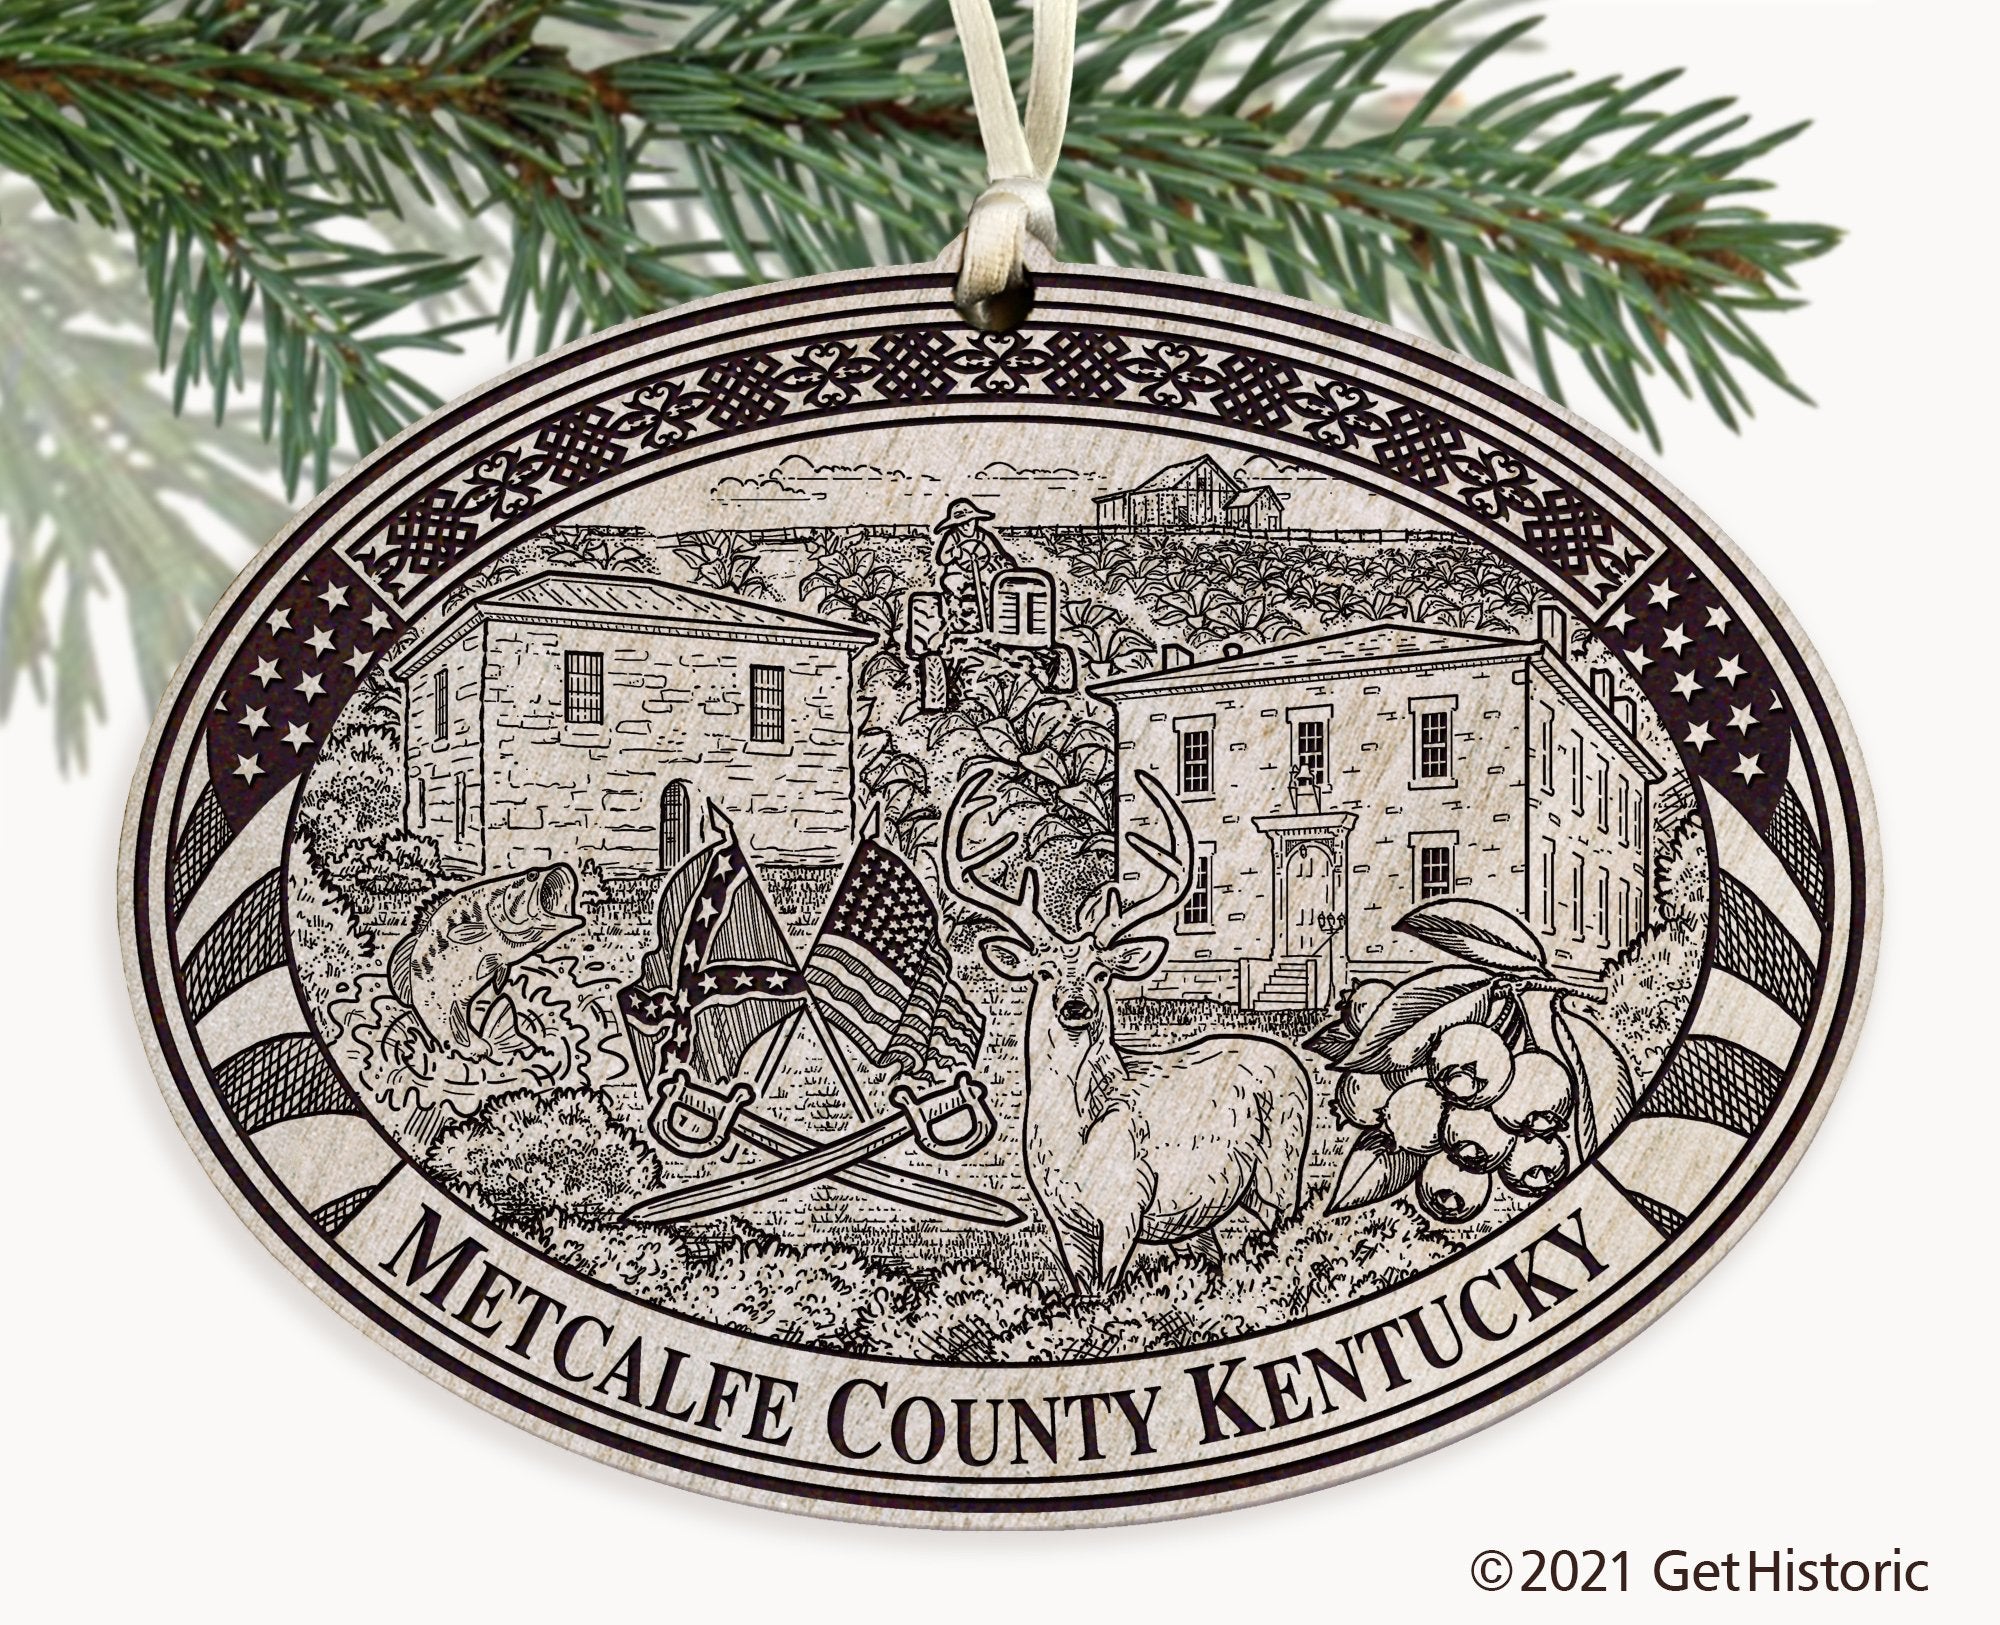 Metcalfe County Kentucky Engraved Ornament